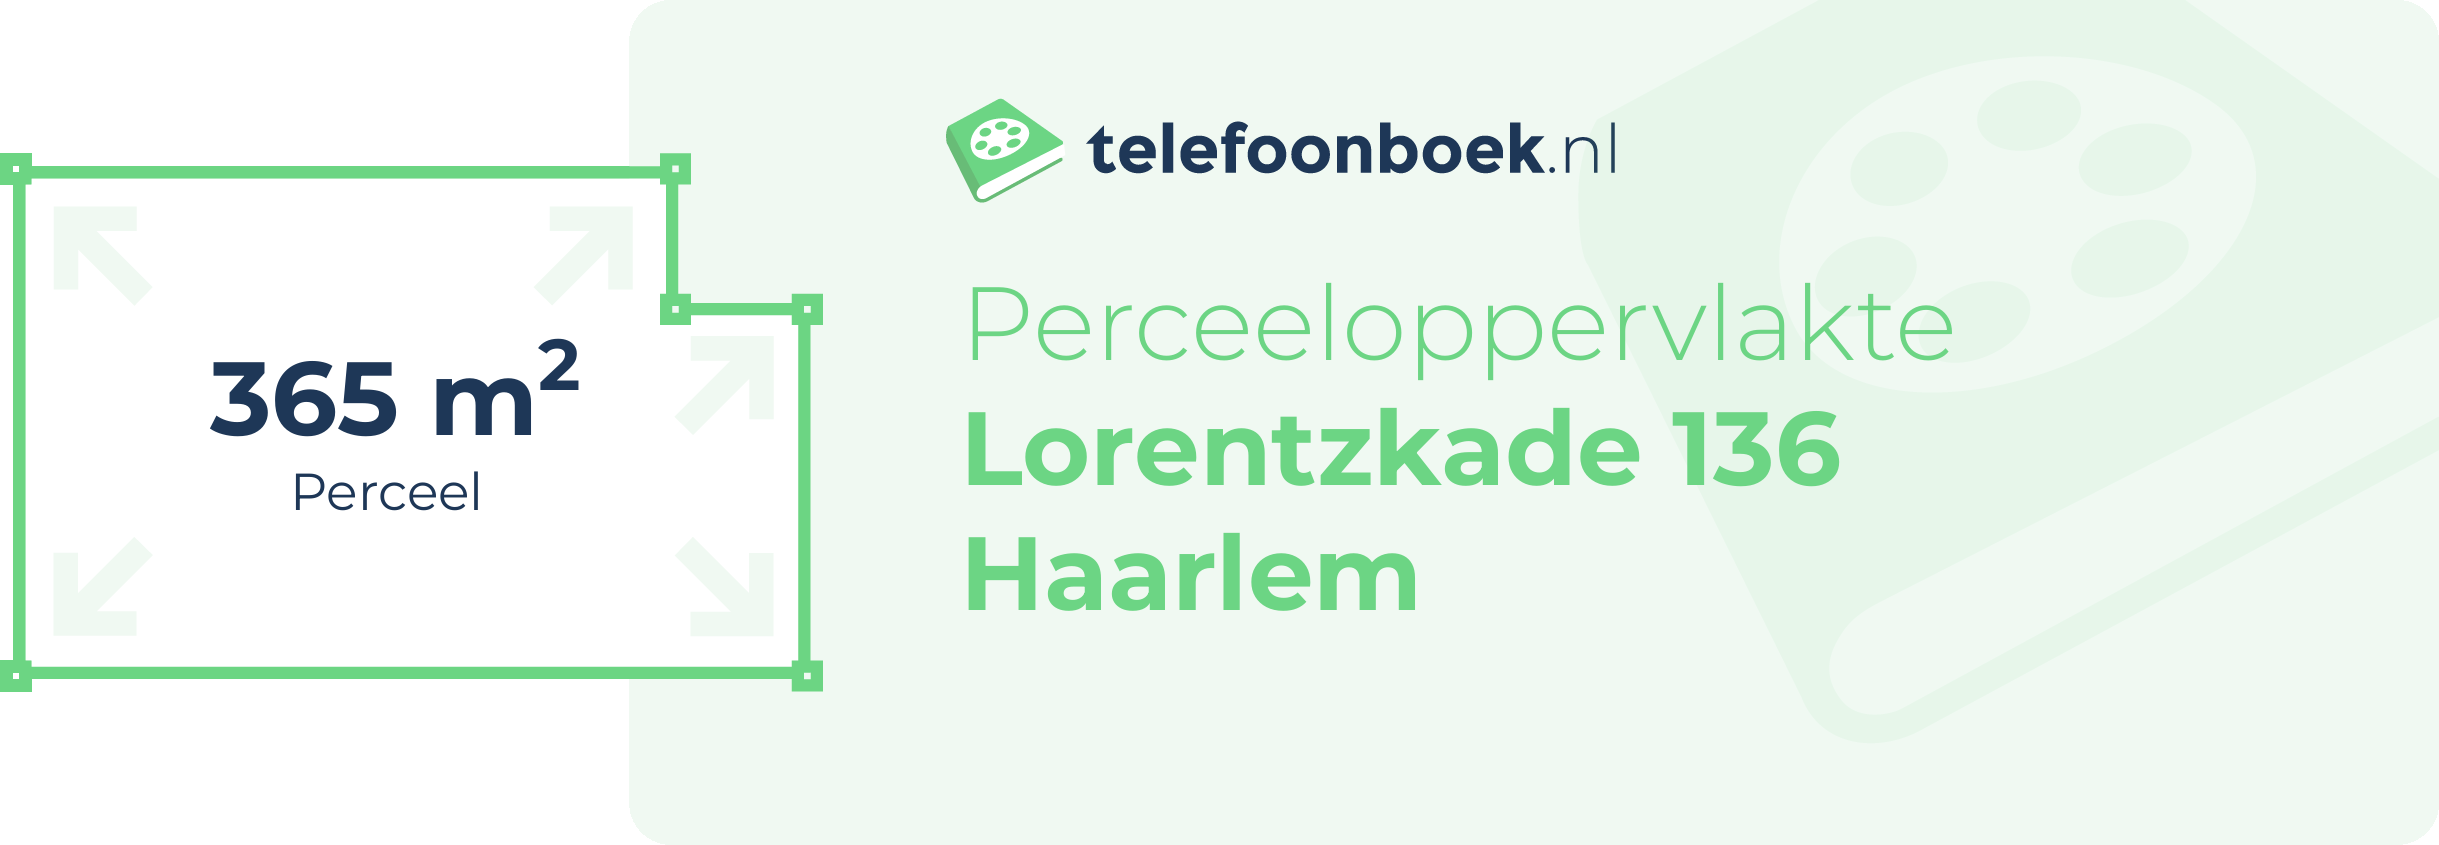 Perceeloppervlakte Lorentzkade 136 Haarlem